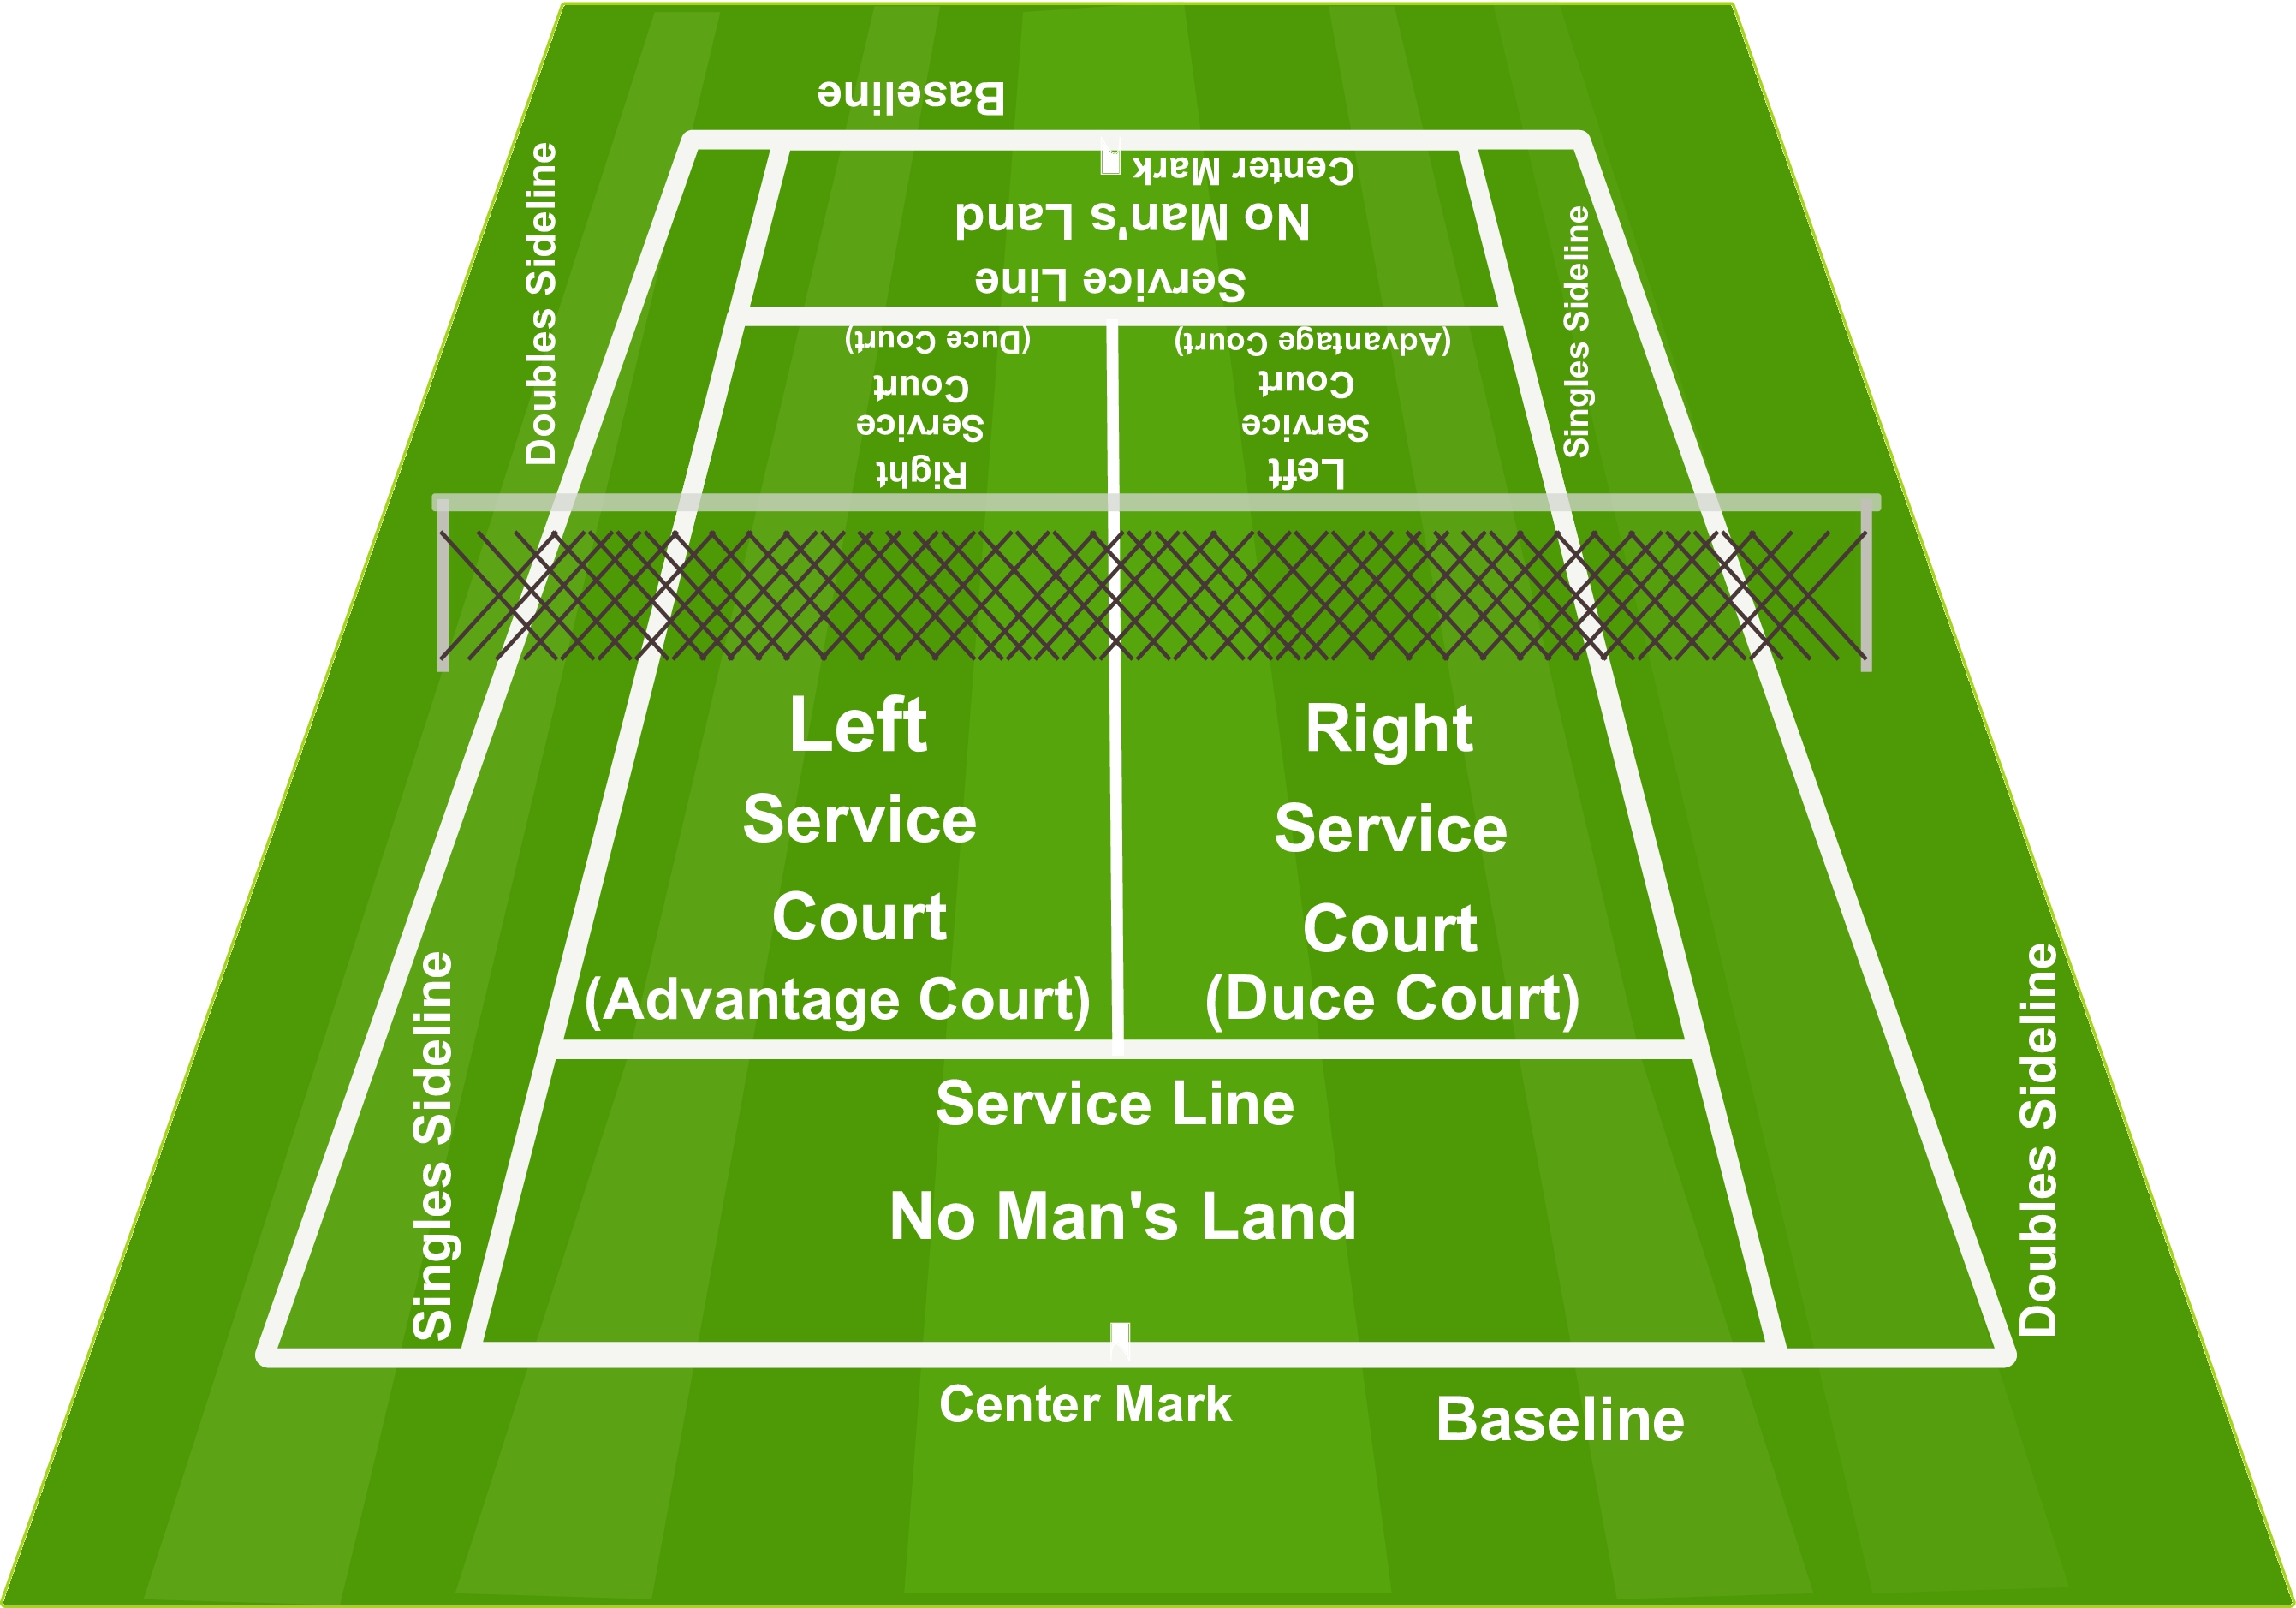 Tennis-Court-Diagram - ClickHowTo